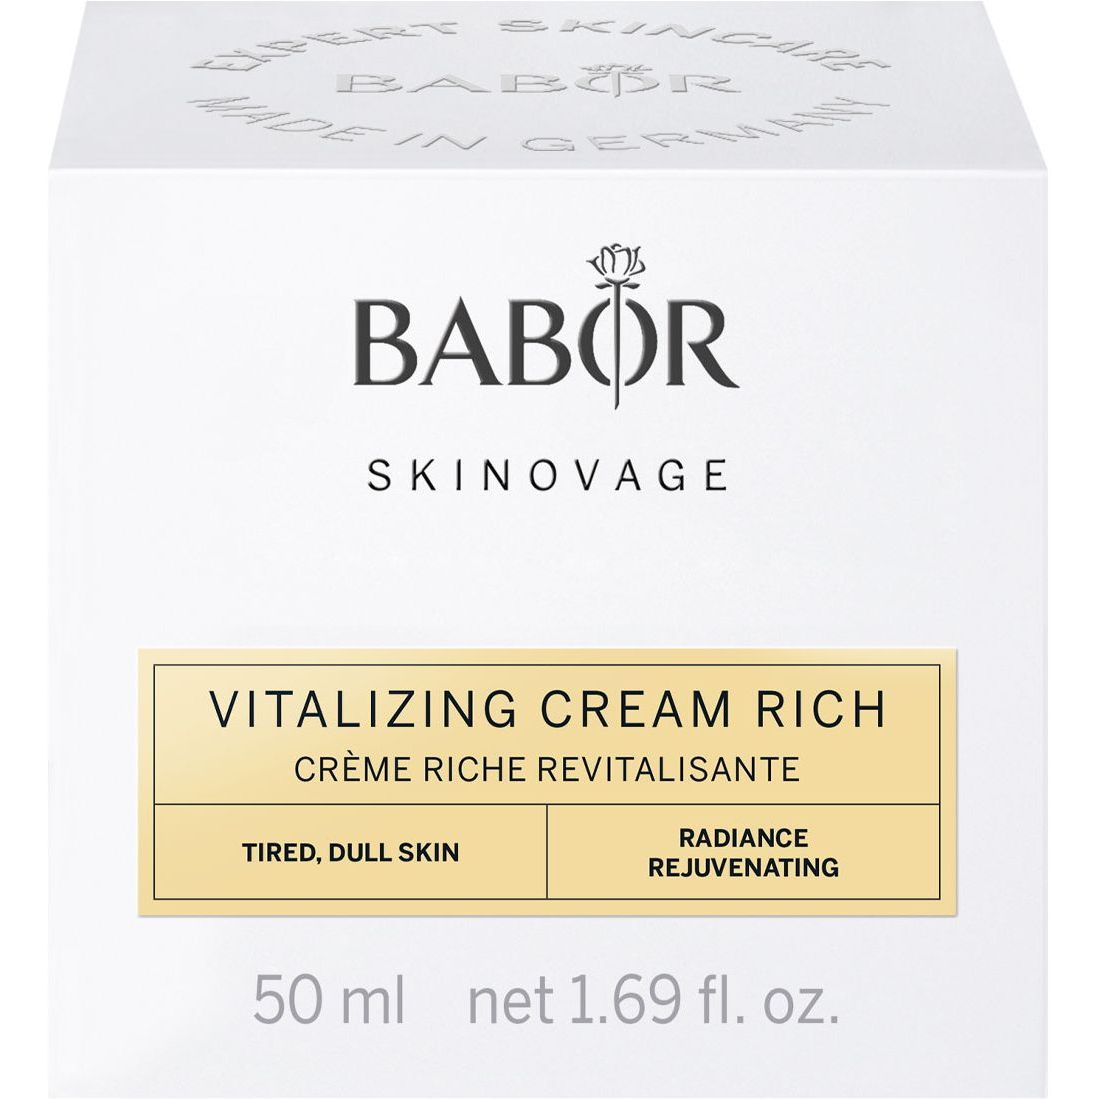 Крем для сияния кожи Babor Skinovage Vitalizing Cream Rich 50 мл - фото 2